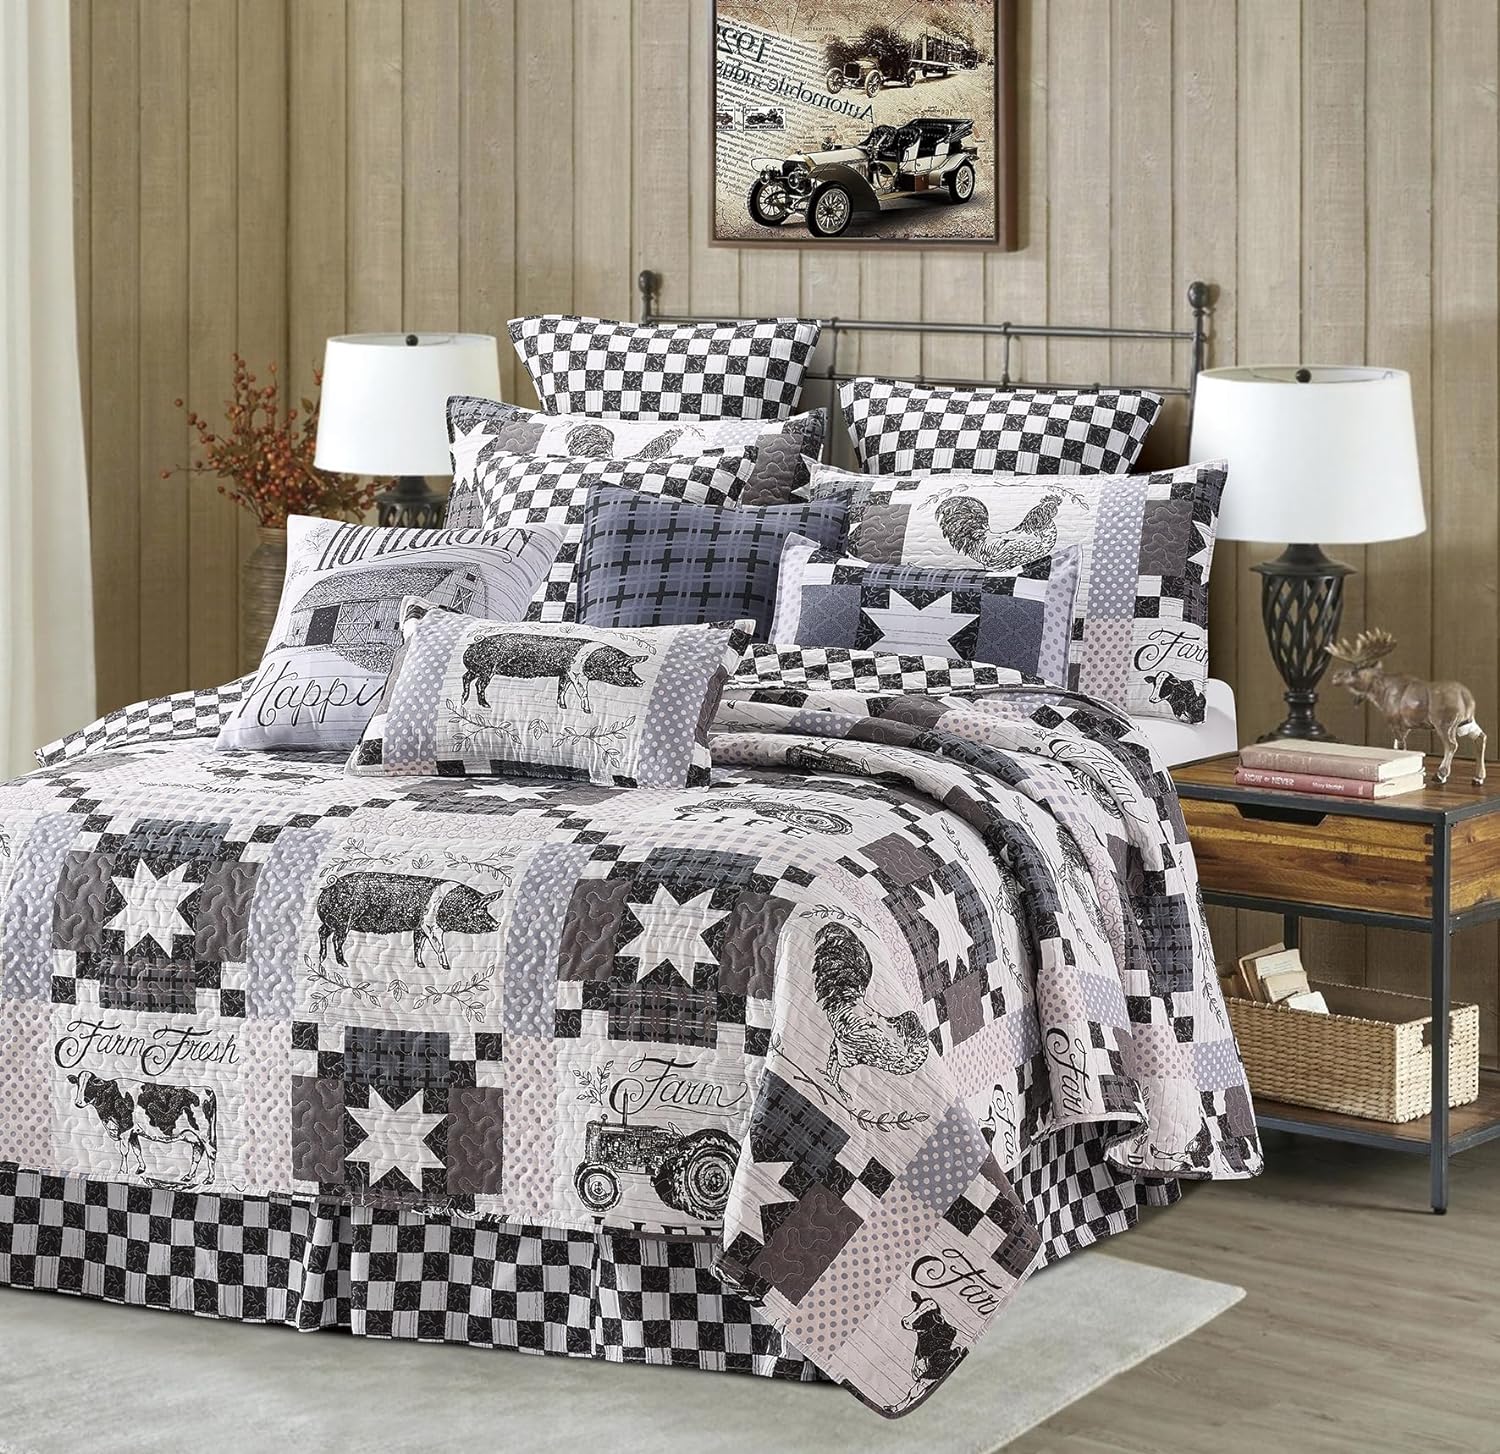 Virah Bella 3 Piece King Cabin Quilt Bedding Set - Farm Life - Rustic Country Reversible Patchwork Comforter Set with Decorative Pillow Shams